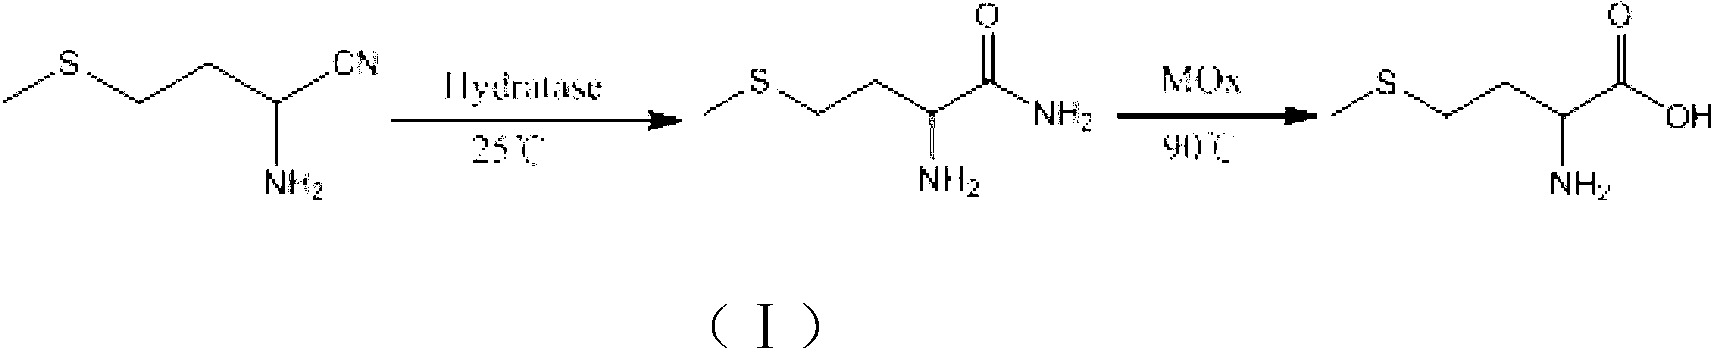 Method for preparing 2-amino-4-methylthio butyric acid by using recombinant nitrilase